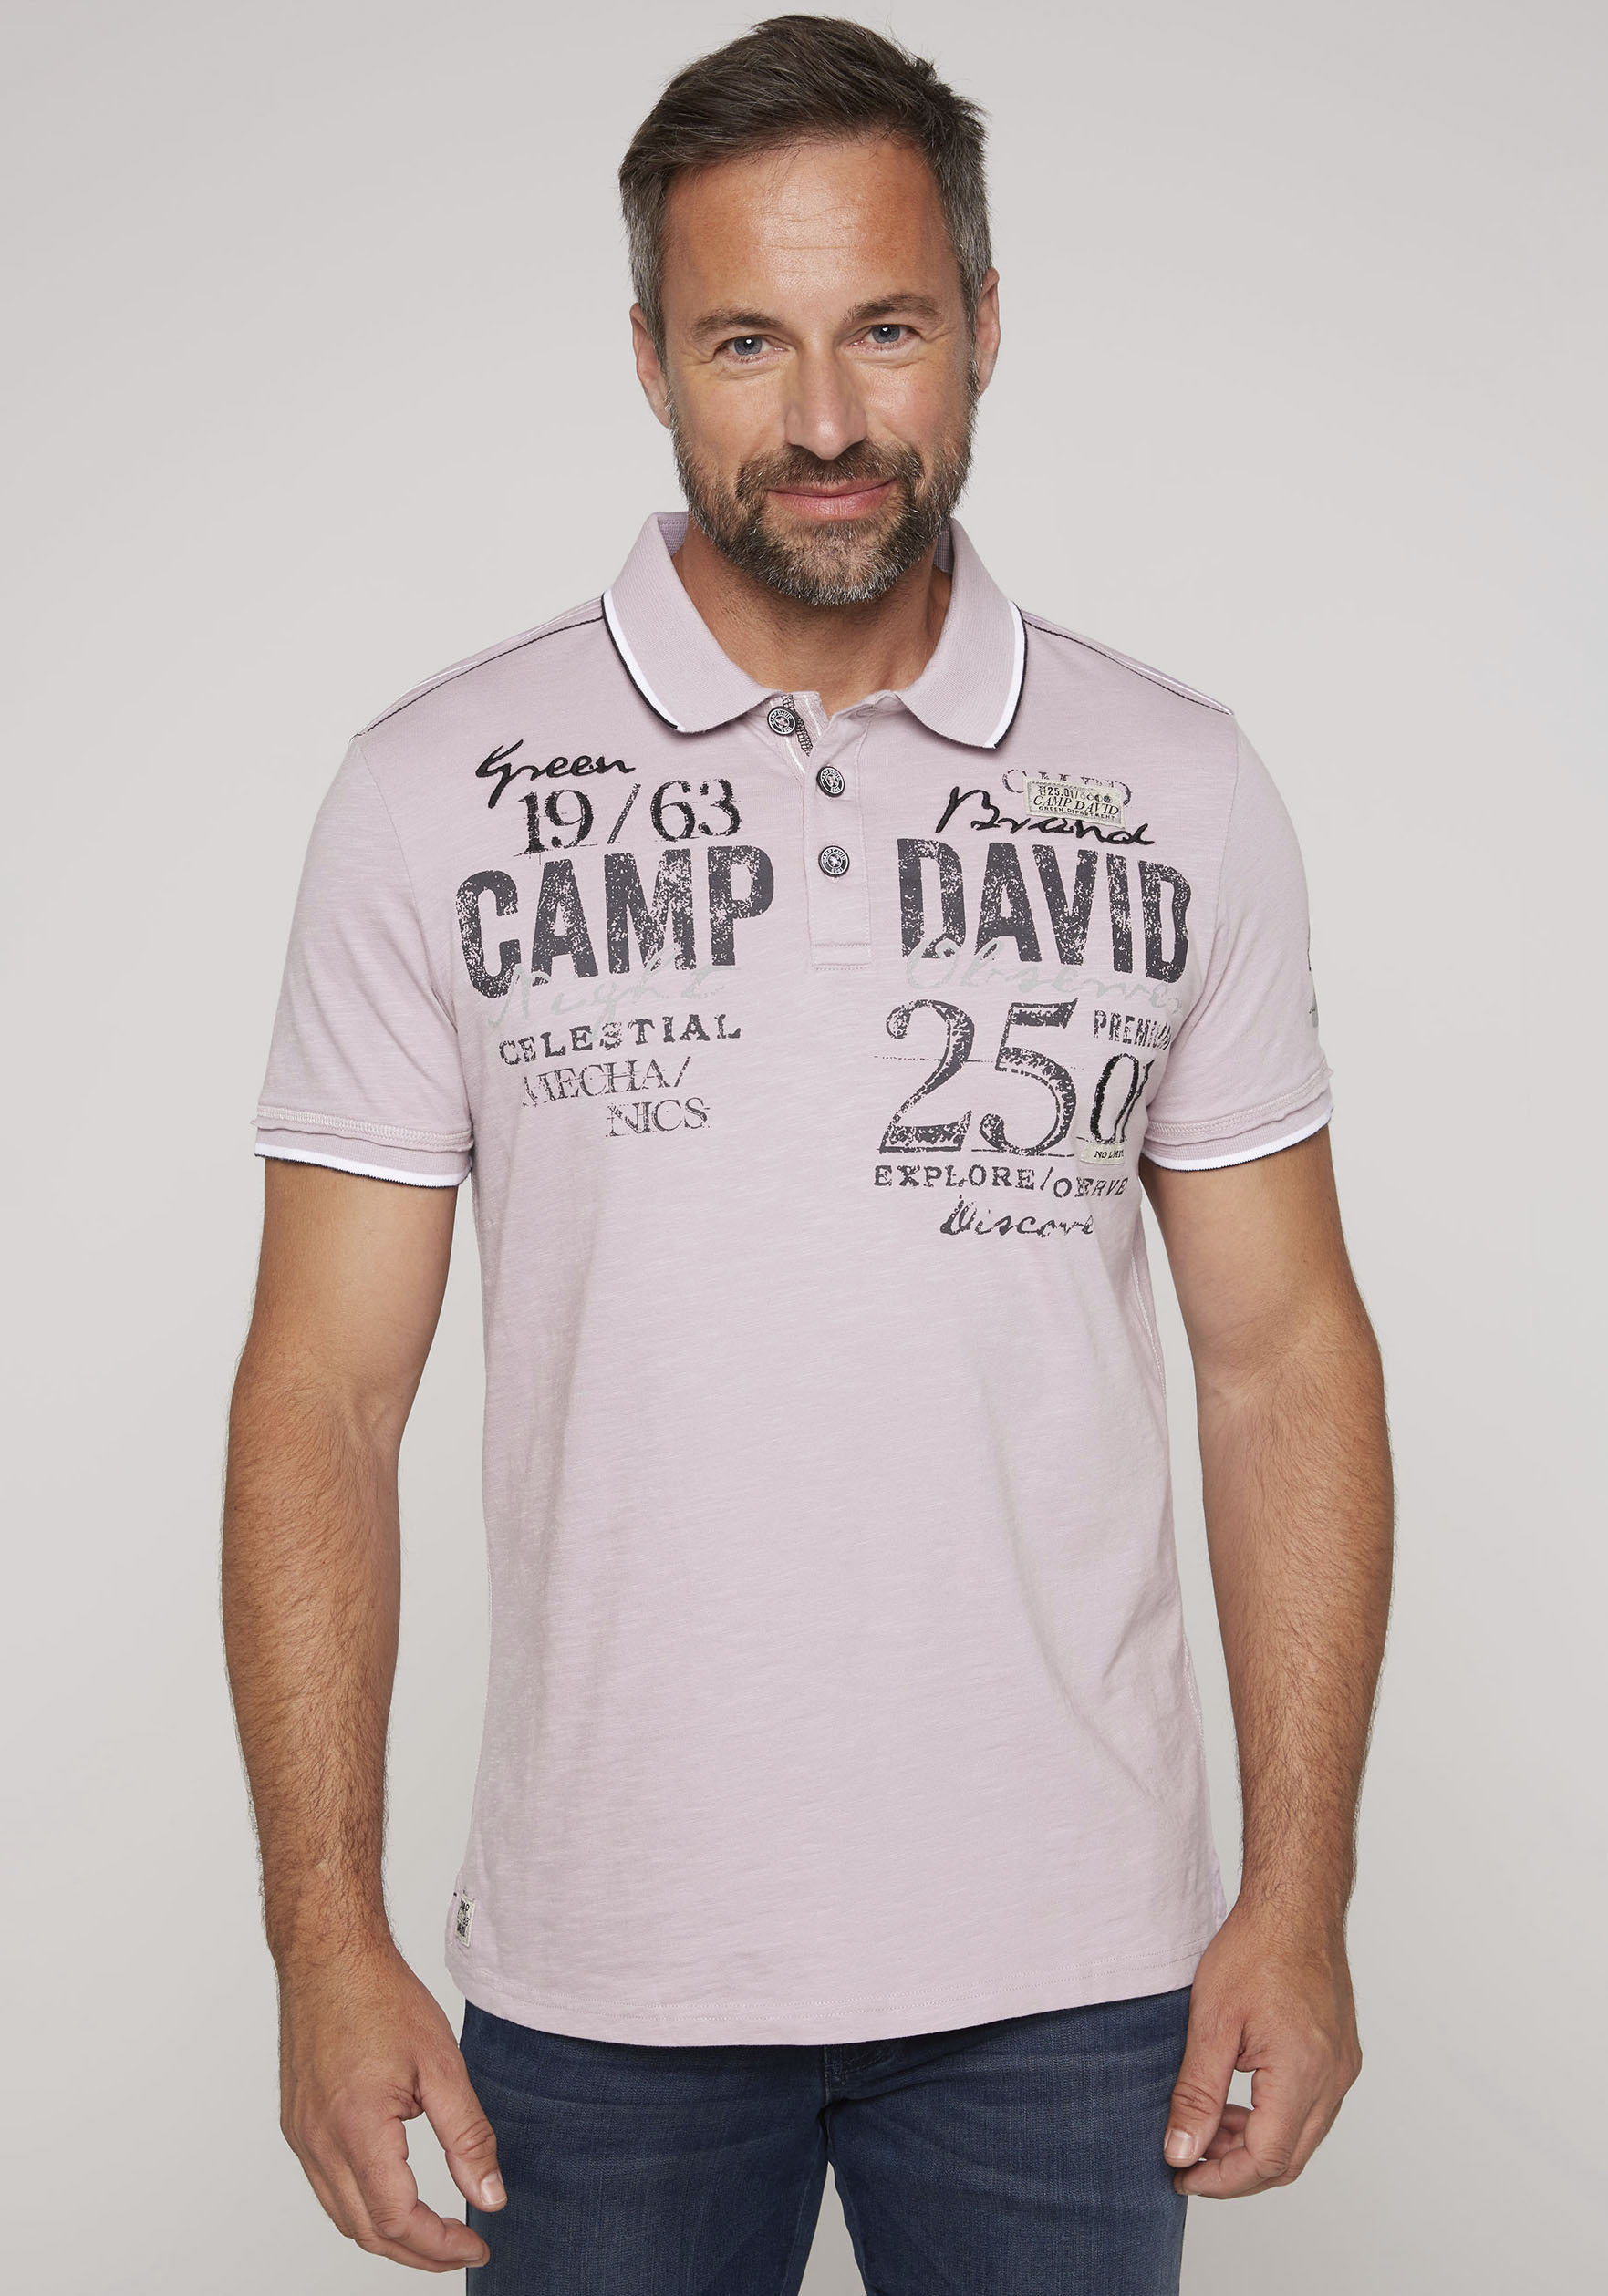 CAMP DAVID Poloshirt von camp david